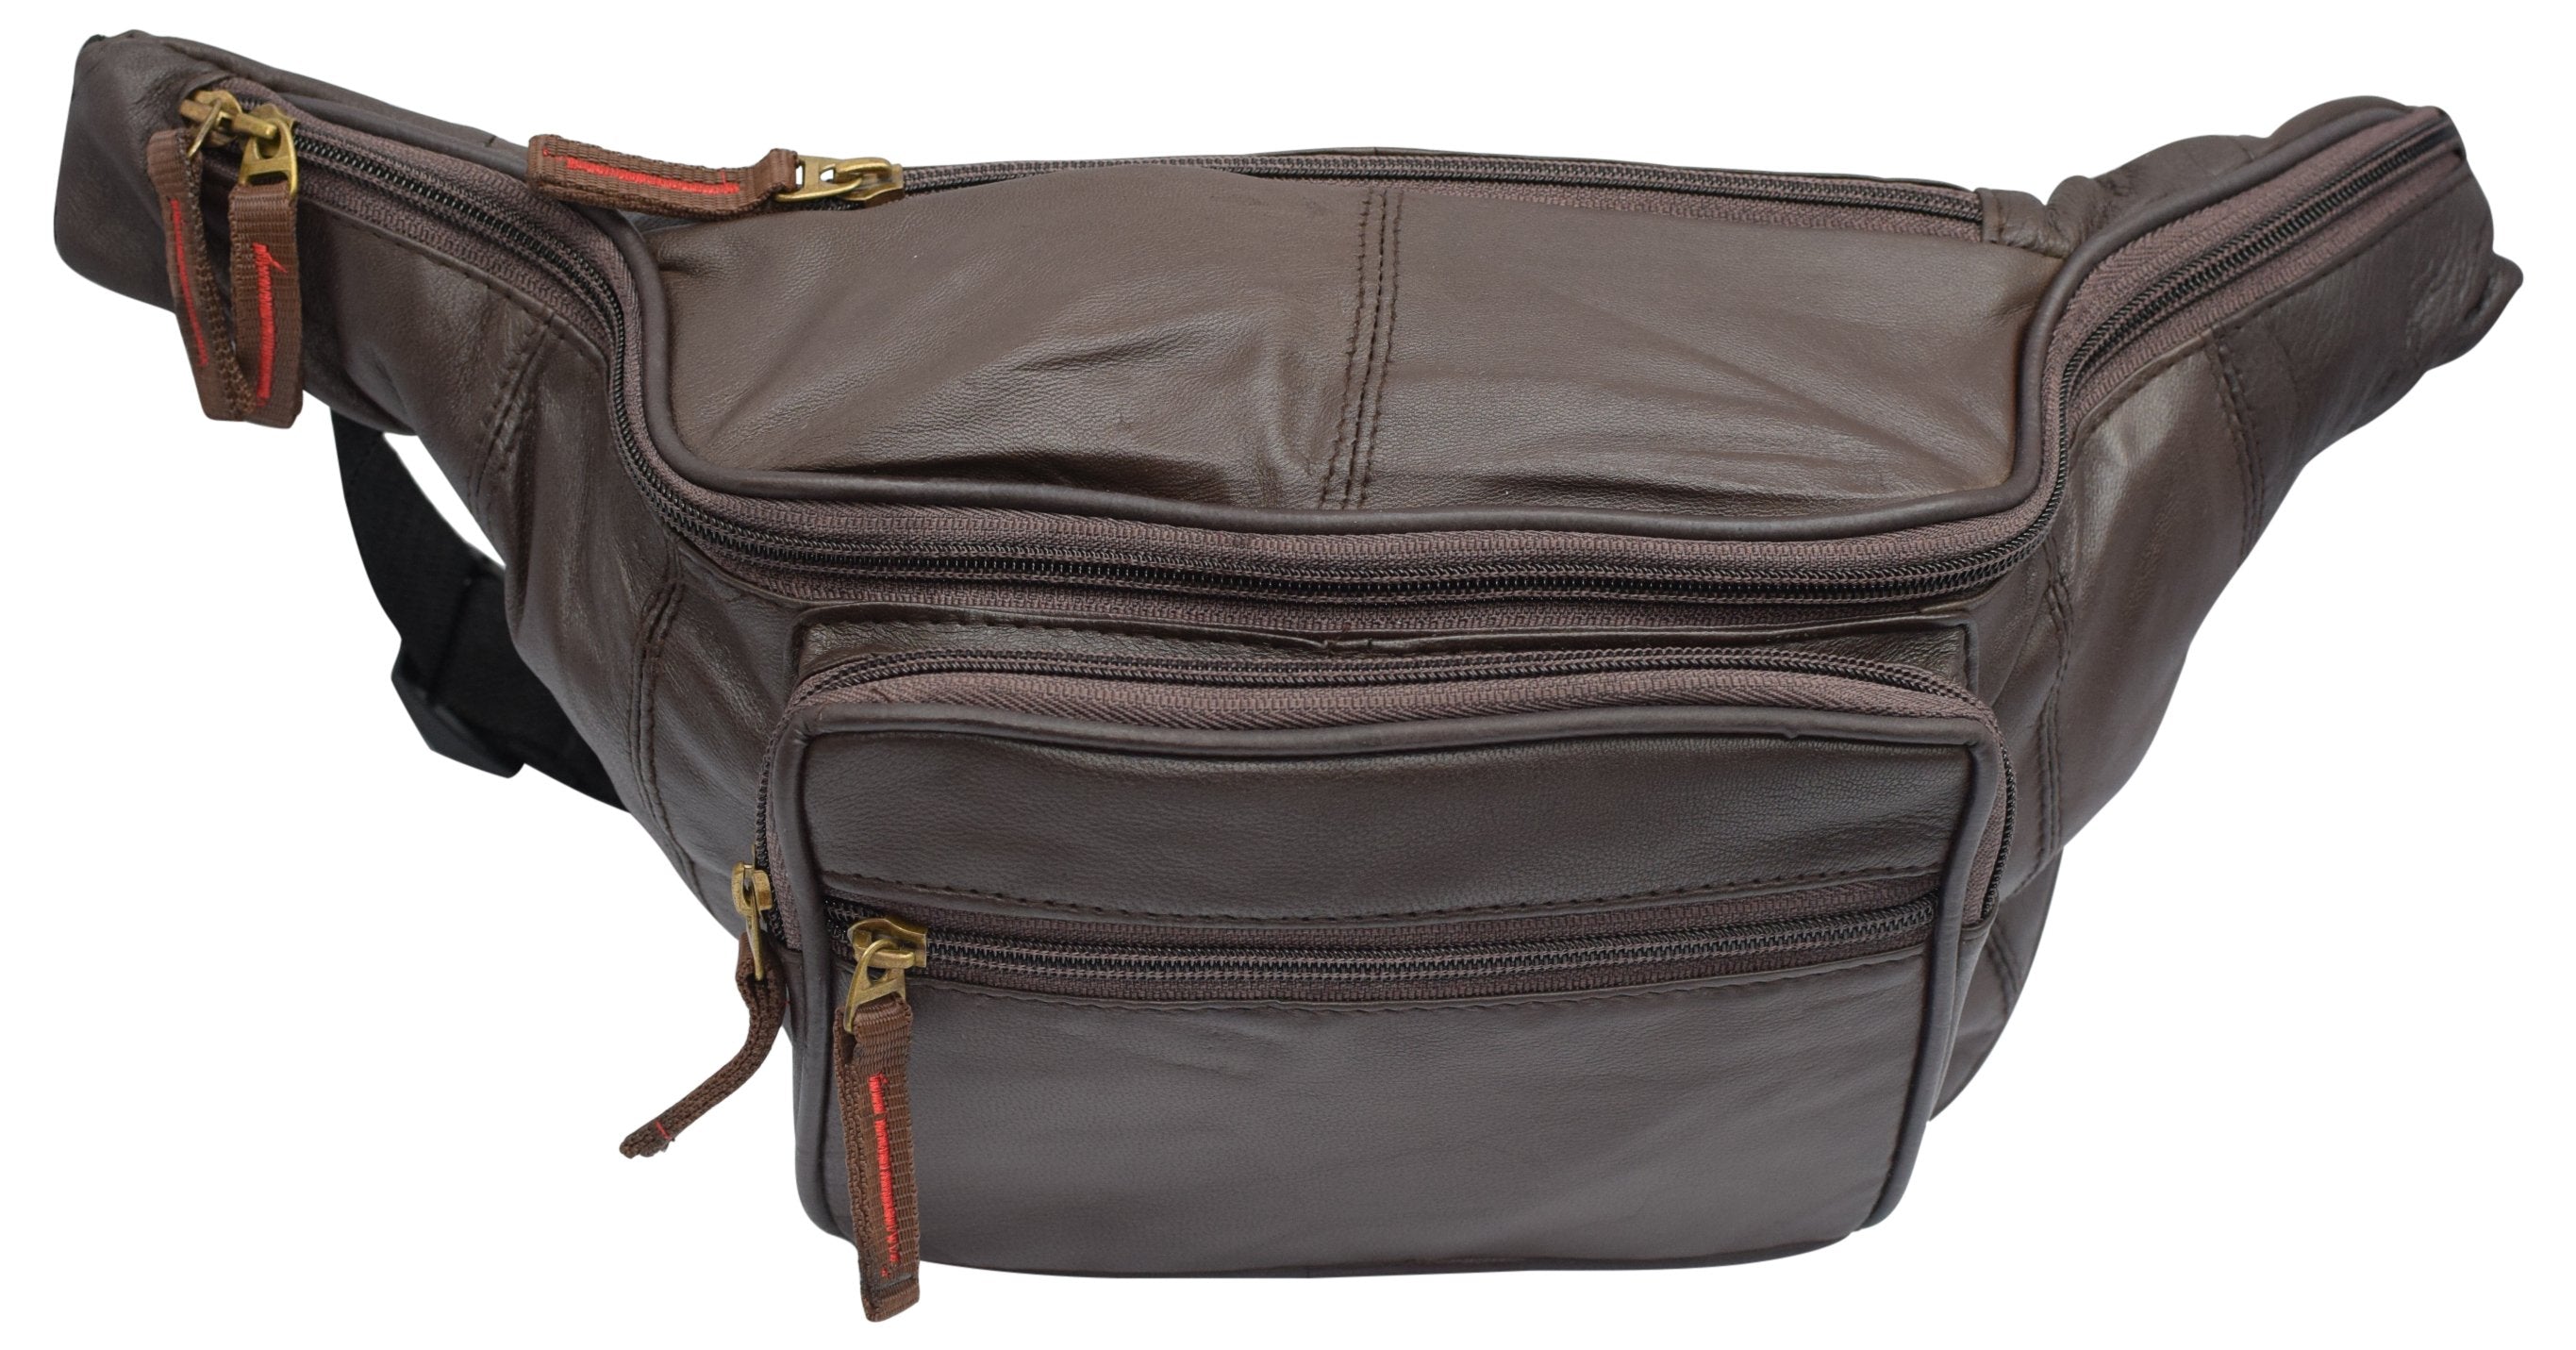 How to Wear a Belt Bag: 19 Modern Outfit Ideas